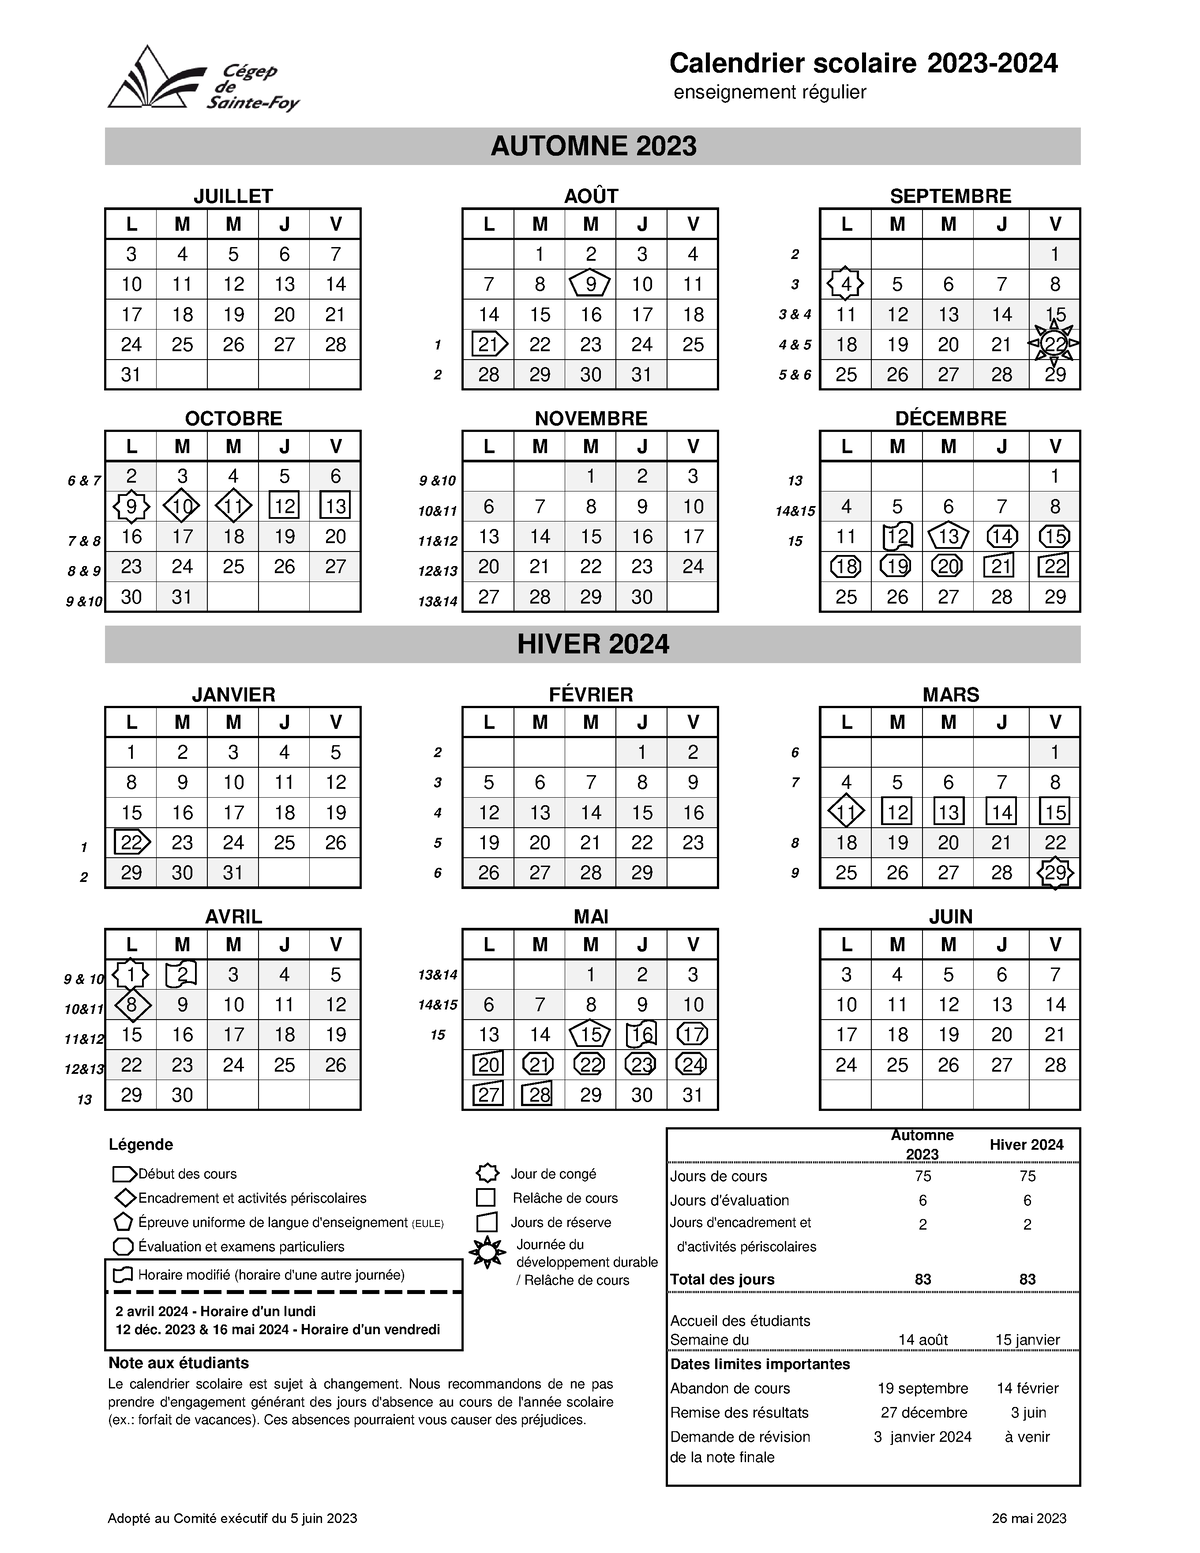 Calendrier scolaire 2023-2024 - Adopté au CE du 5 juin 2023 - L M M J V L M  M J V L M M J V 3 4 5 6 - Studocu